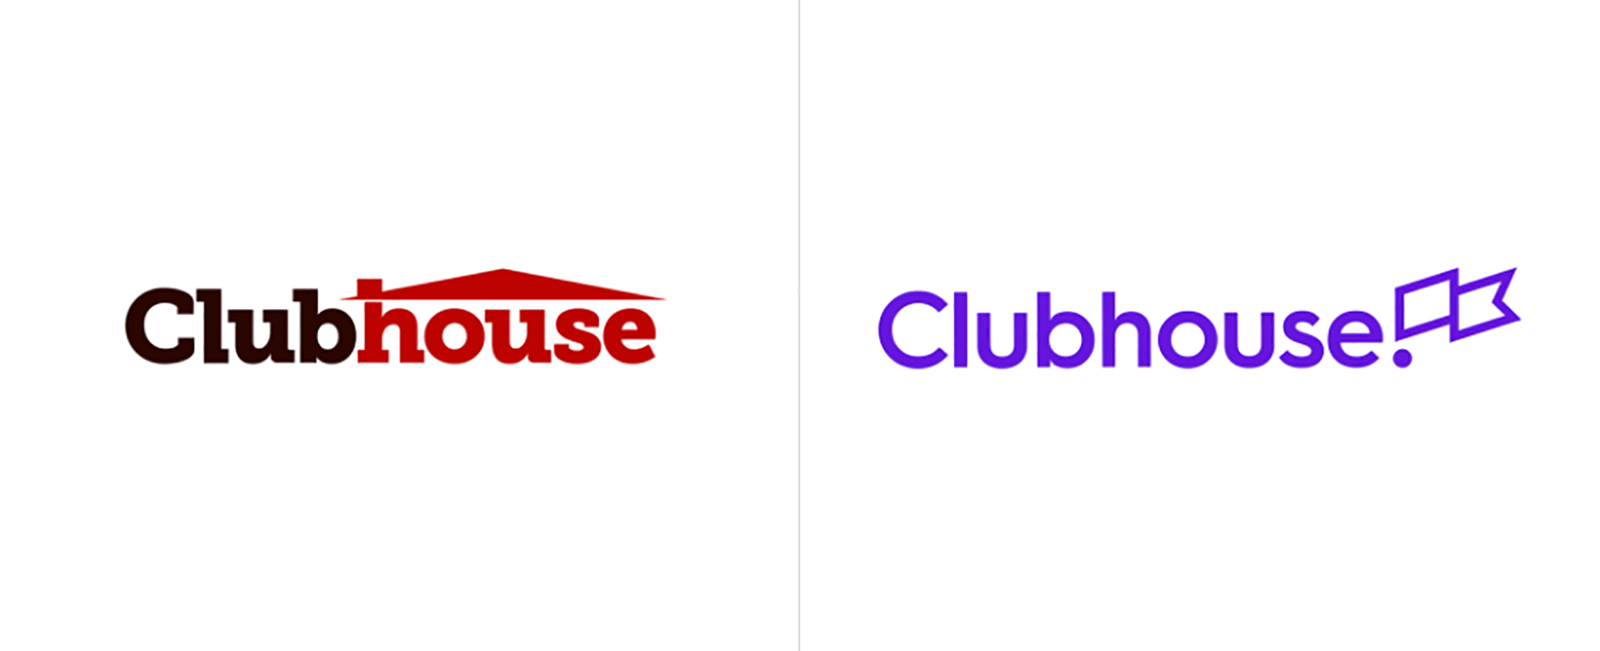 Clubhouse 品牌启用新的logo和形象设计-VI设计